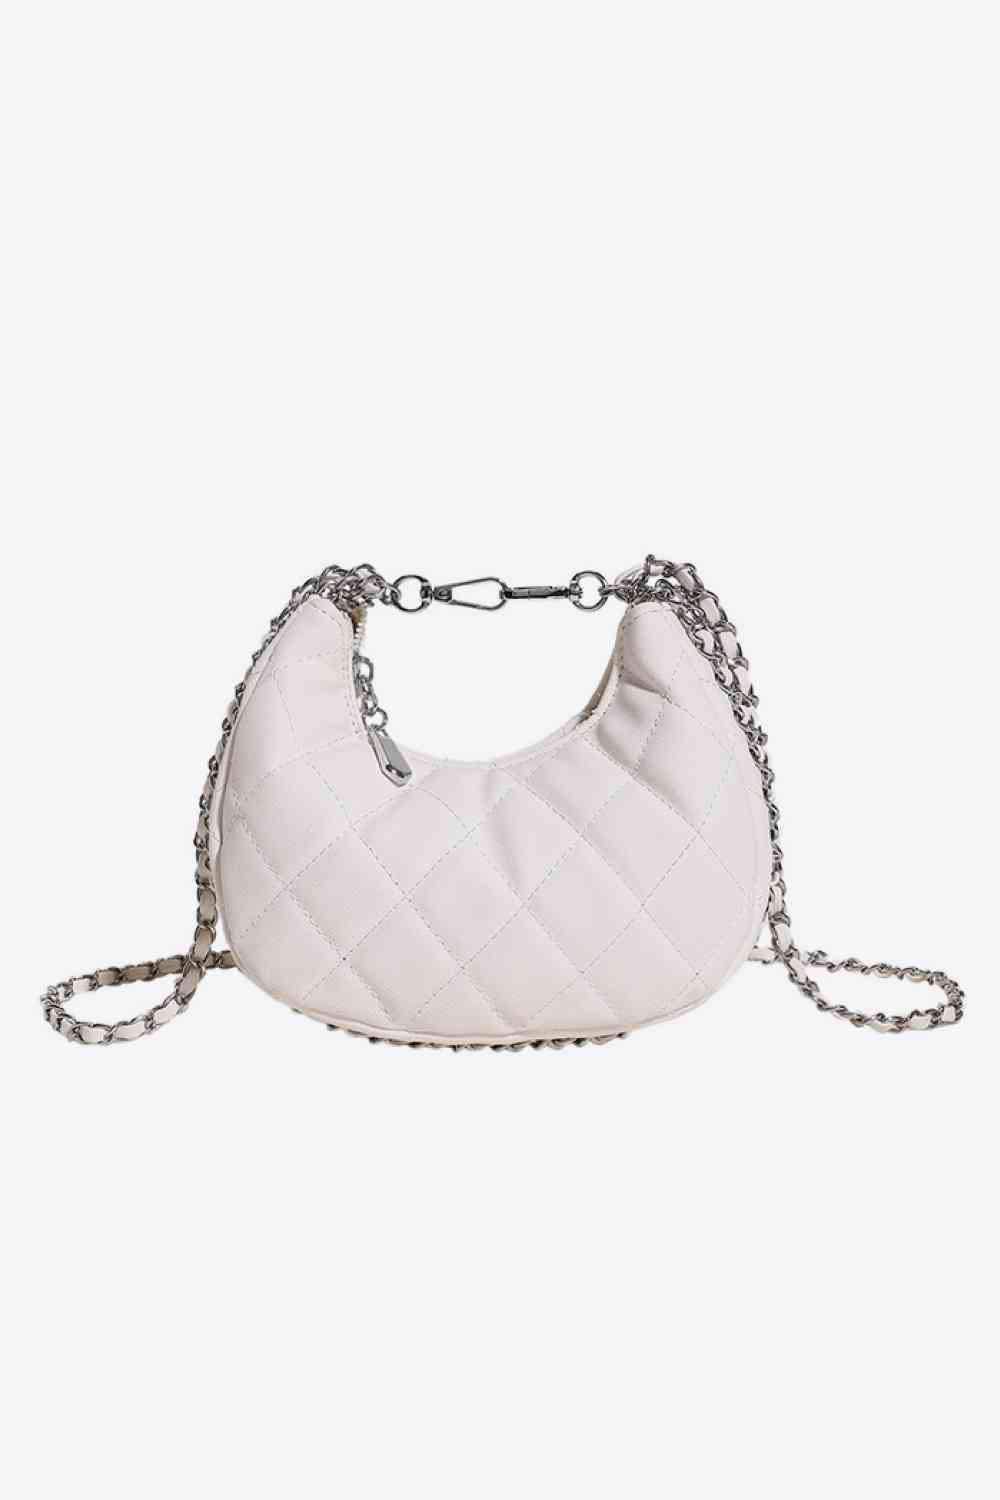 PU Leather Handbag White One Size